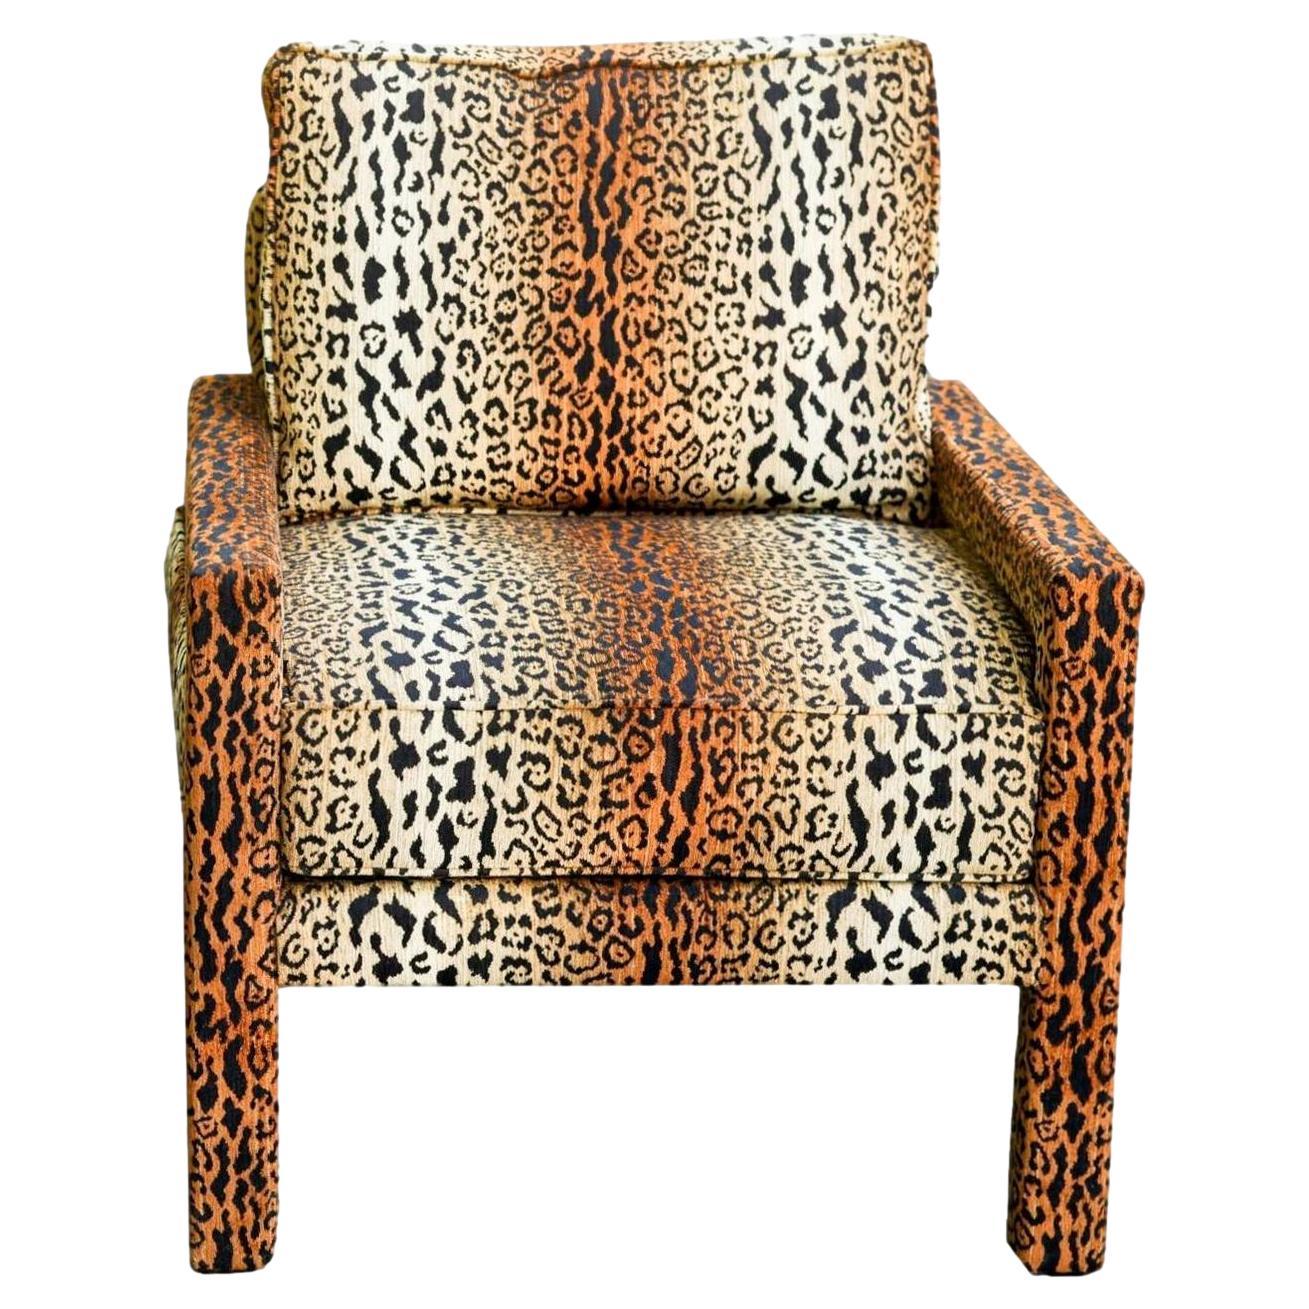 A New Milo Baughman-Style Parsons Chair in Designer Cheetah Velvet